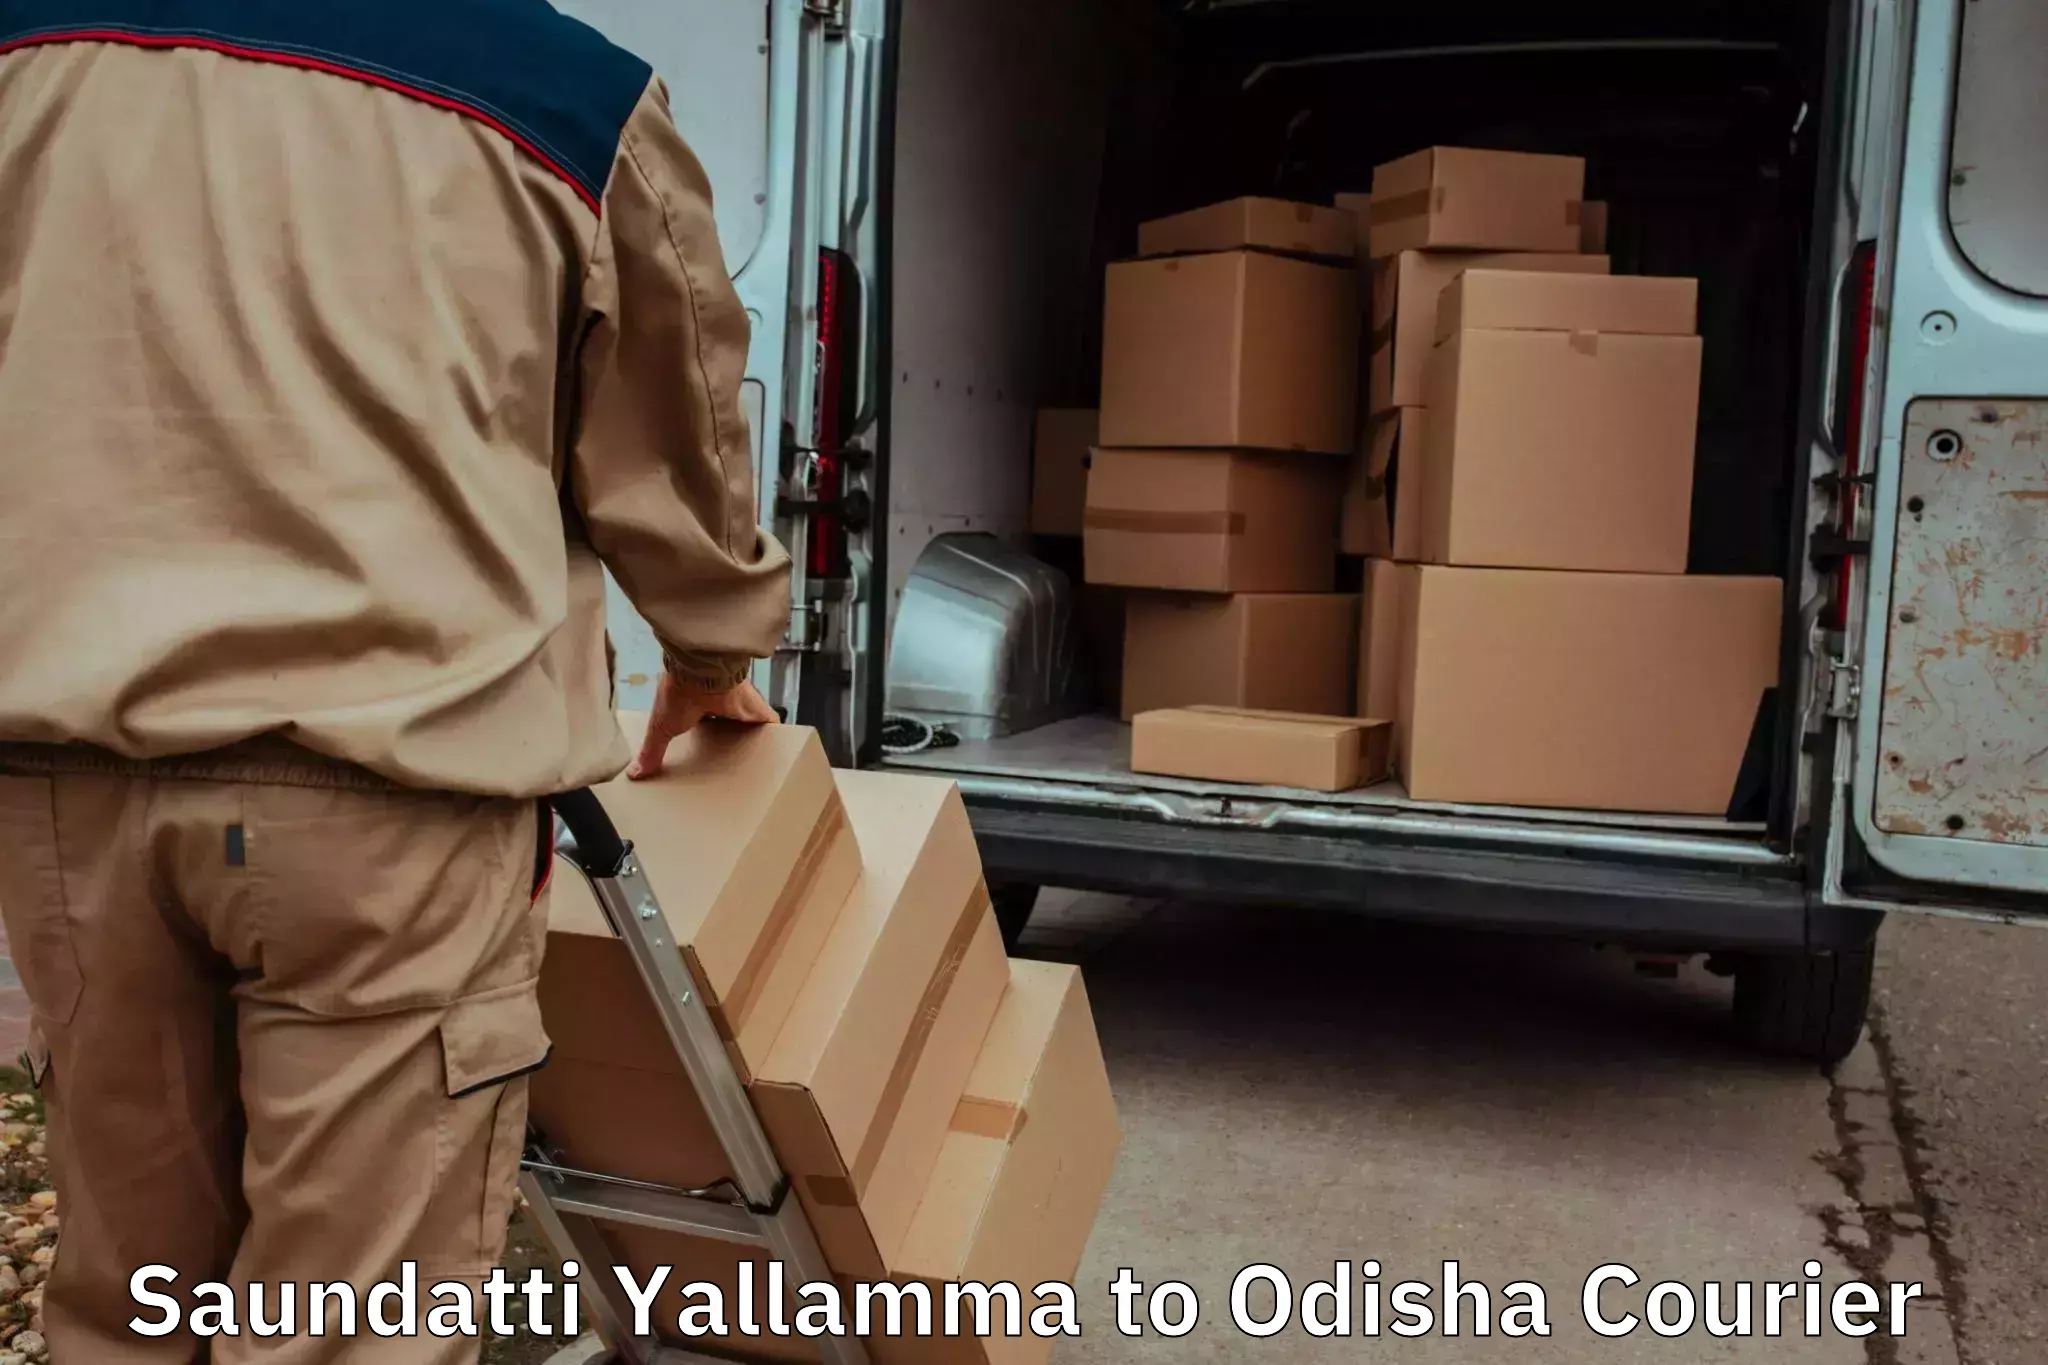 Professional moving company Saundatti Yallamma to Sankerko